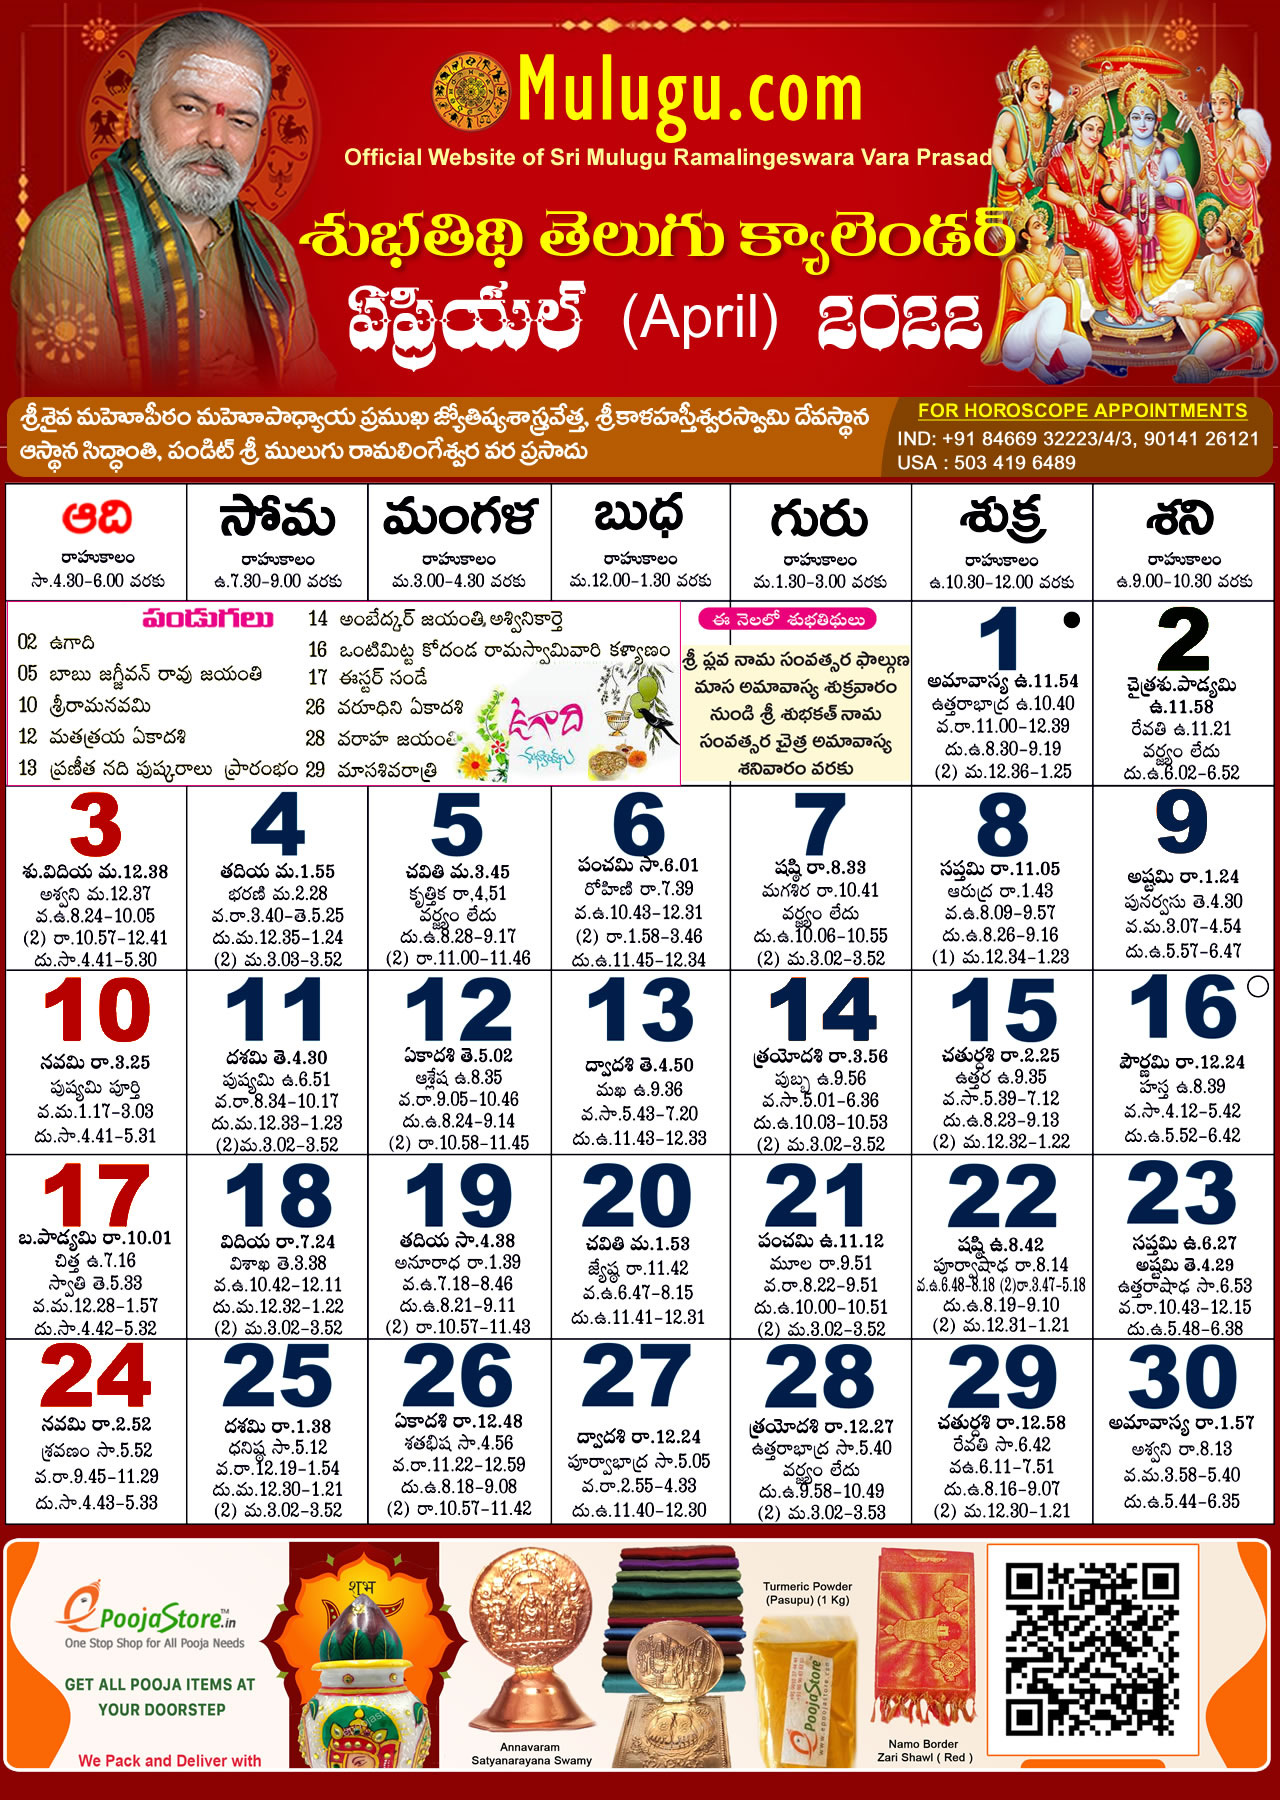 Eenadu Calendar 2022 Subhathidi April Telugu Calendar 2022 | Telugu Calendar 2022 - 2023 | Telugu  Subhathidi Calendar 2022 | Calendar 2022 | Telugu Calendar 2022 |  Subhathidi Calendar 2022 | Chicago Calendar 2022 |